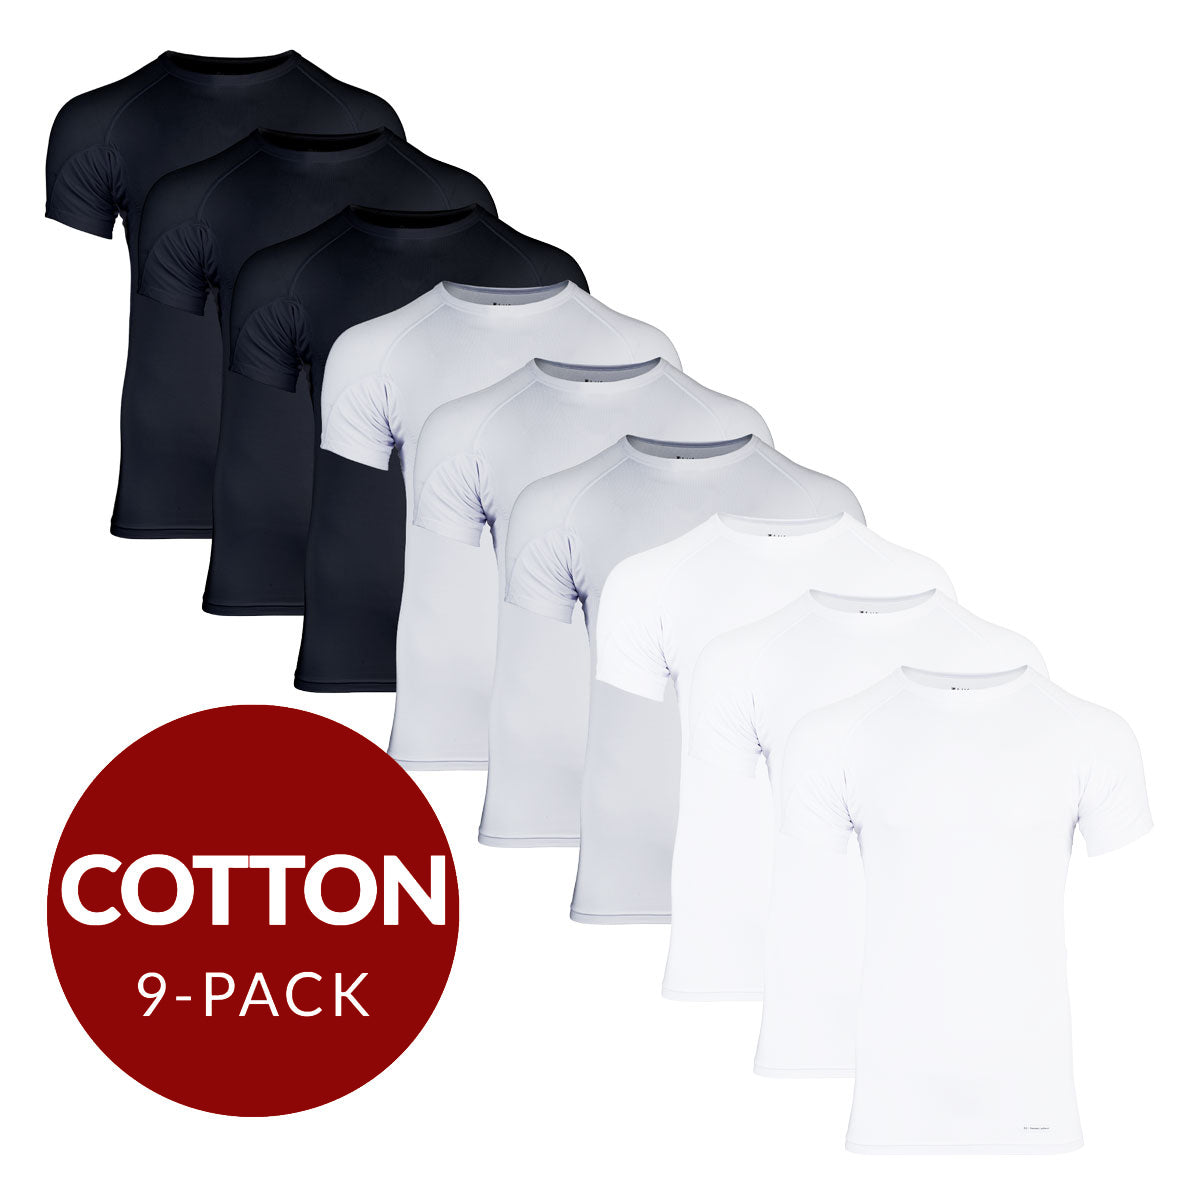 Crew Neck Cotton Sweat Proof Undershirt For Men - Mix 9-Pack (3x White, Black, Grey) - Ejis